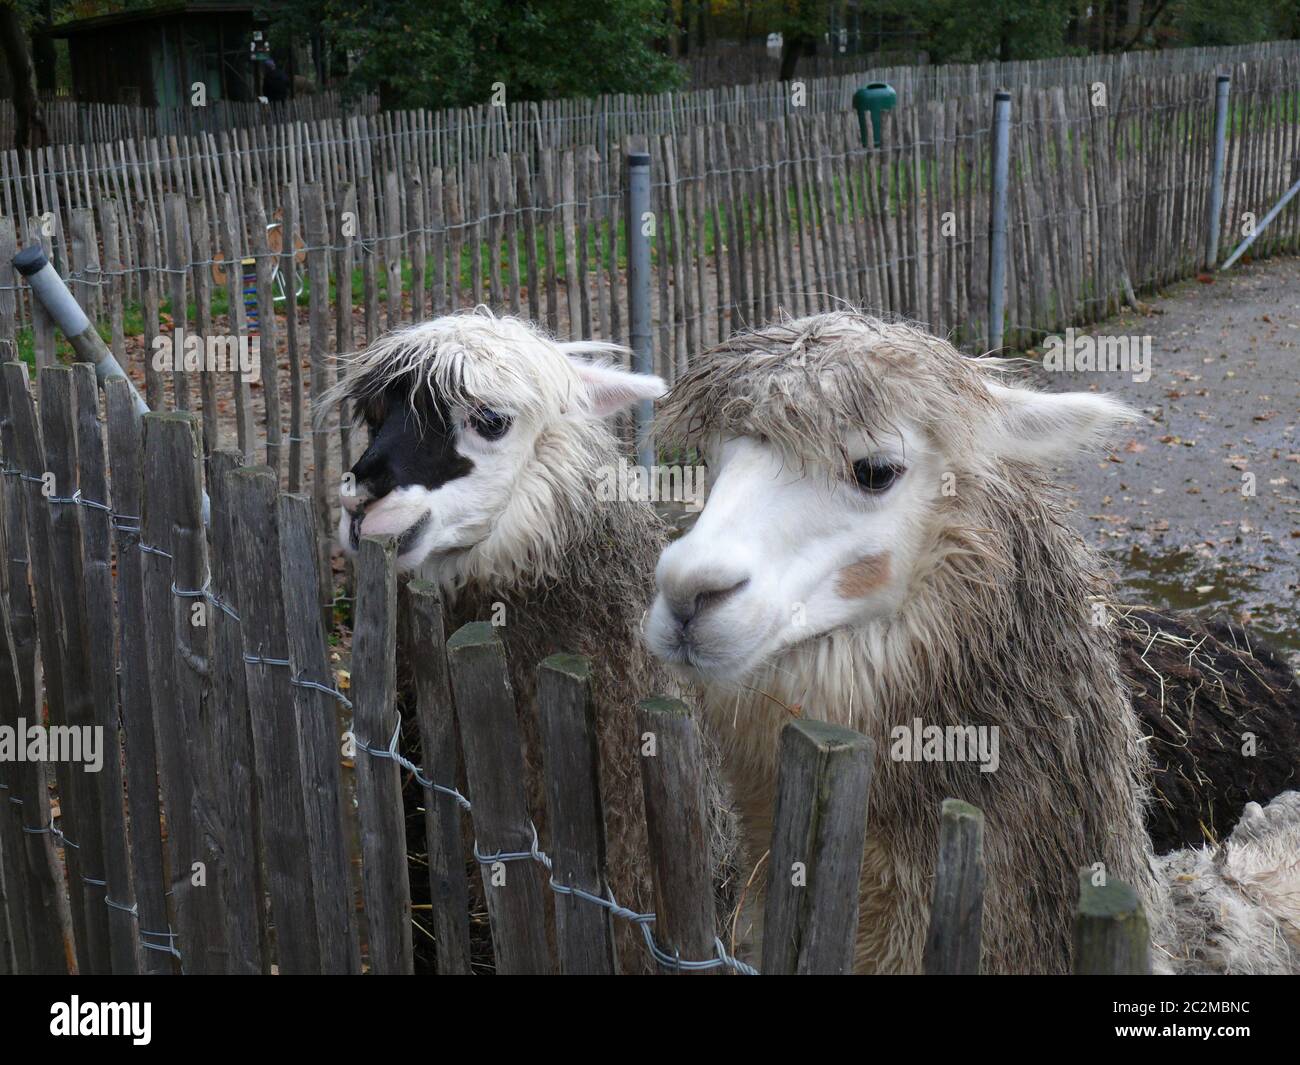 Lamas in a enclosure Stock Photo